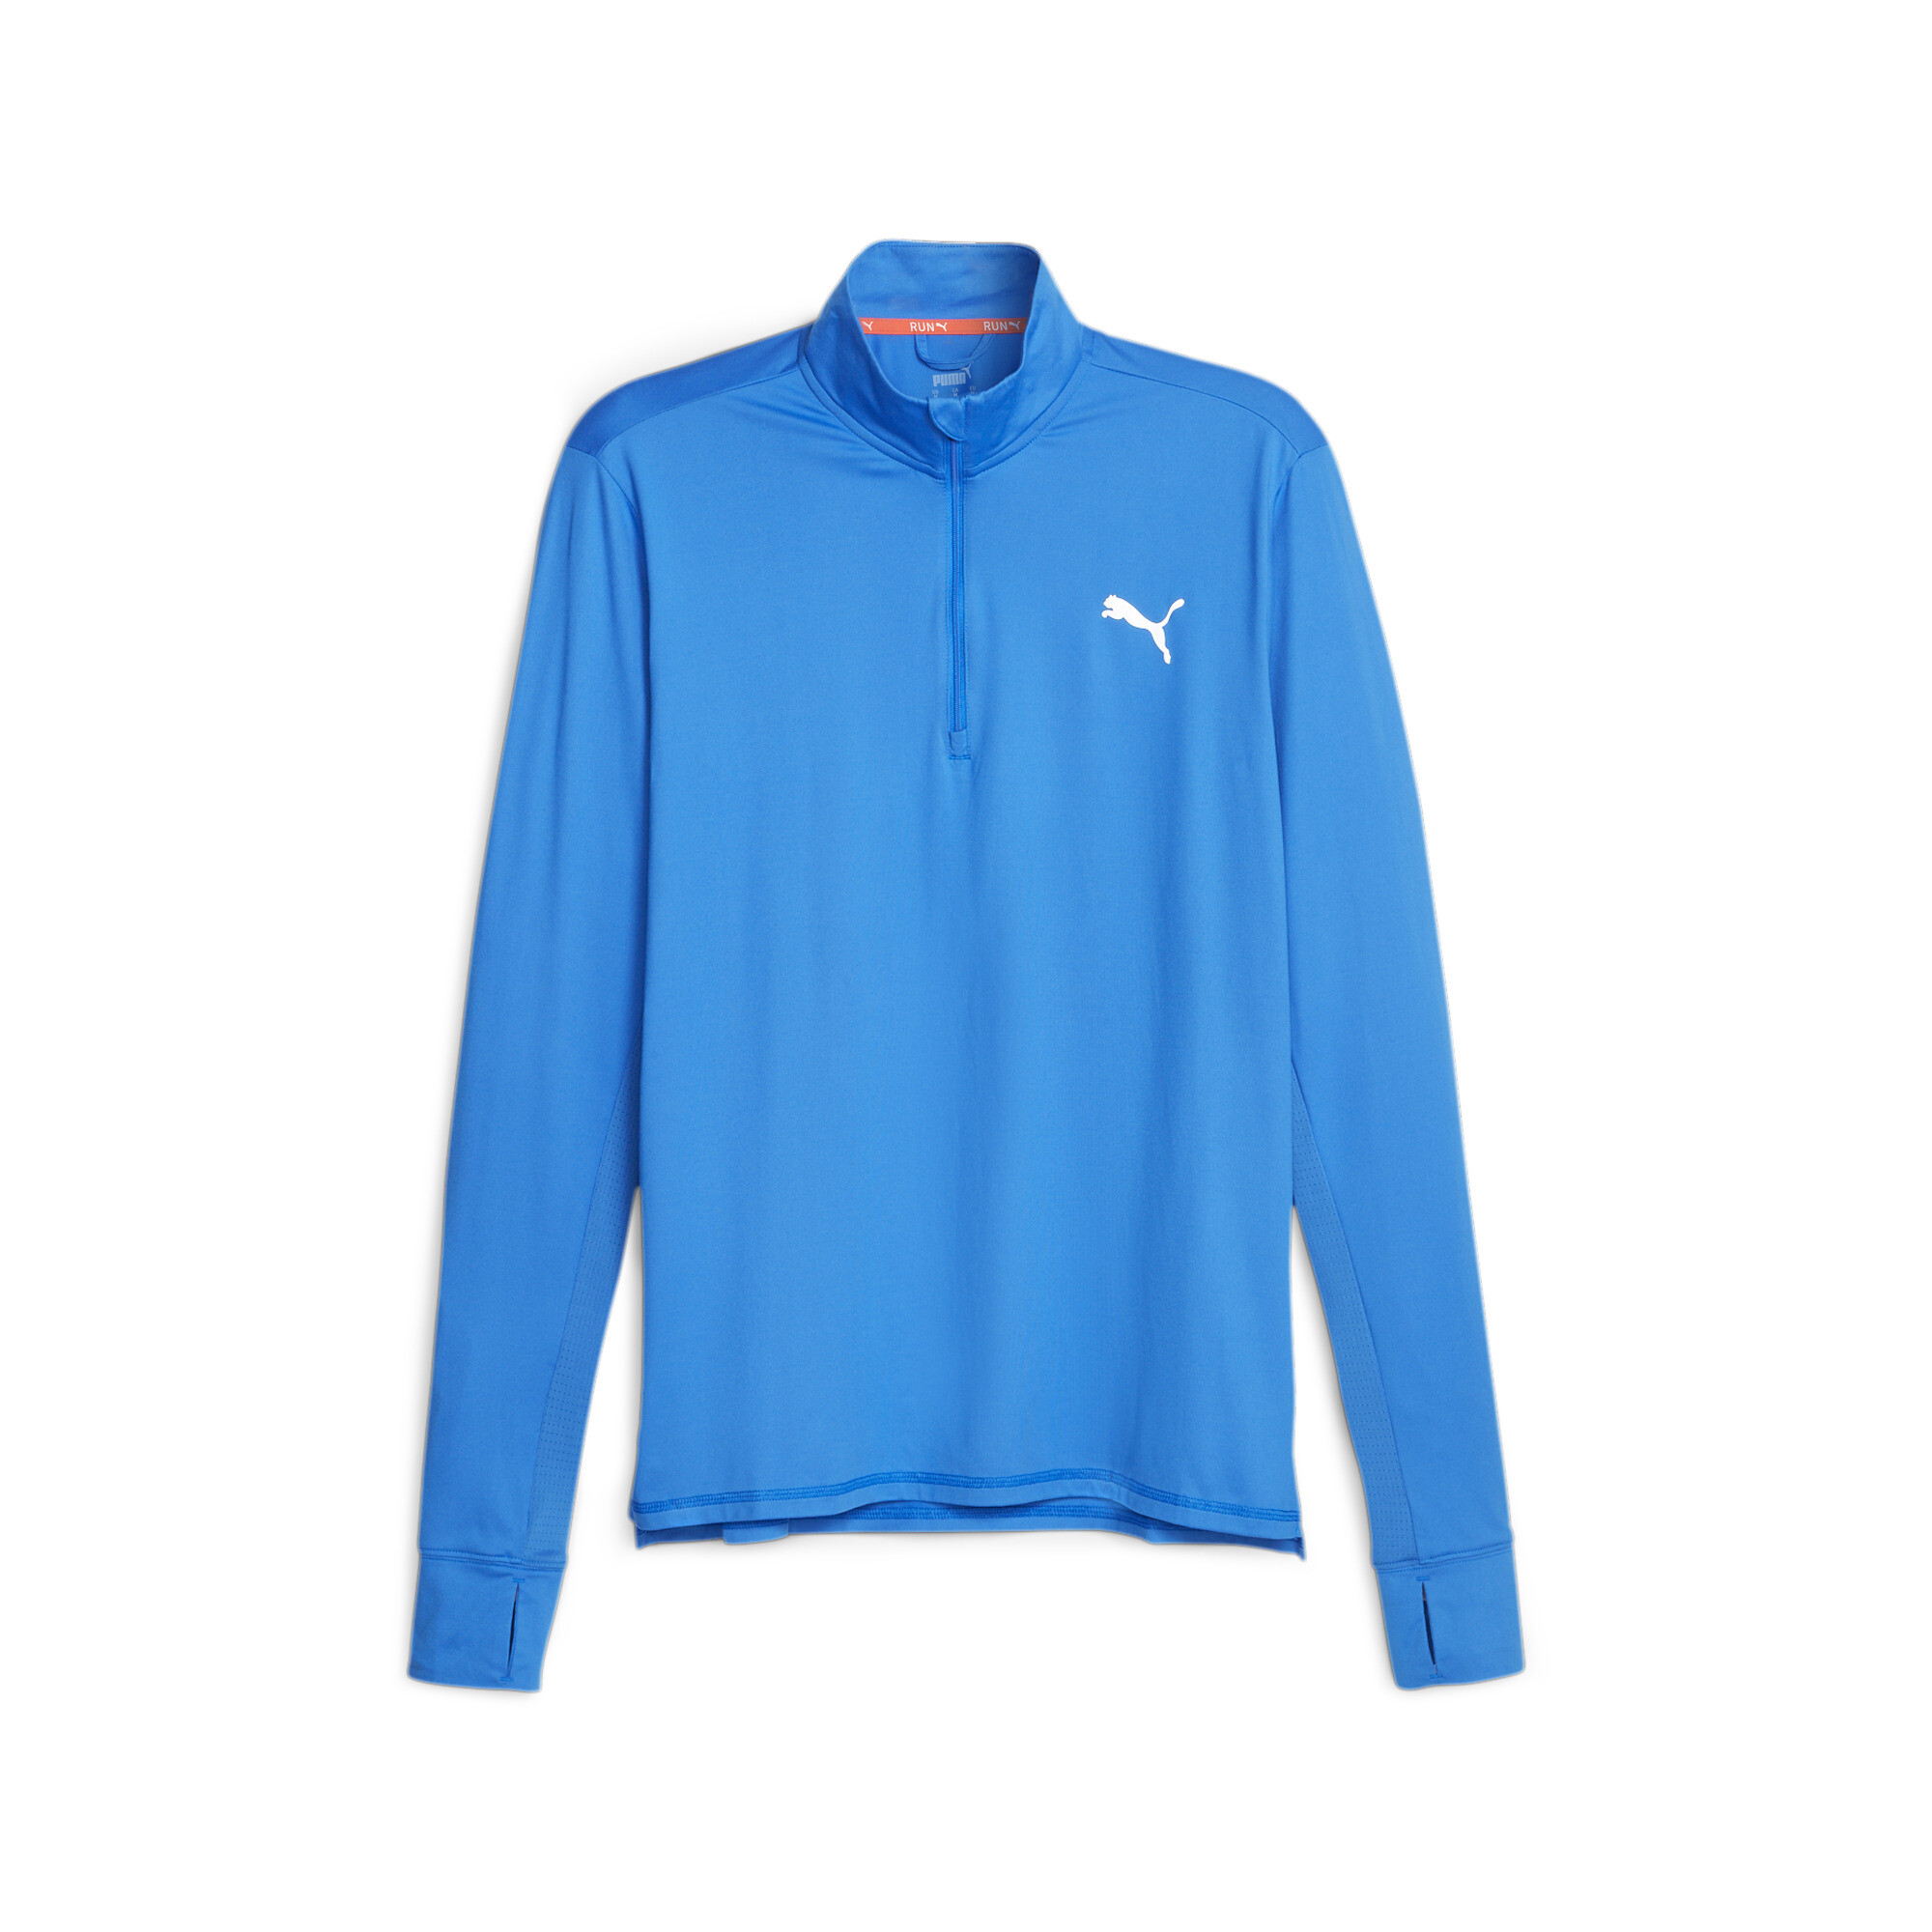 Men's Puma Run Favourite Quarter-Zip Running Top, Blue, Size 4XL, Clothing